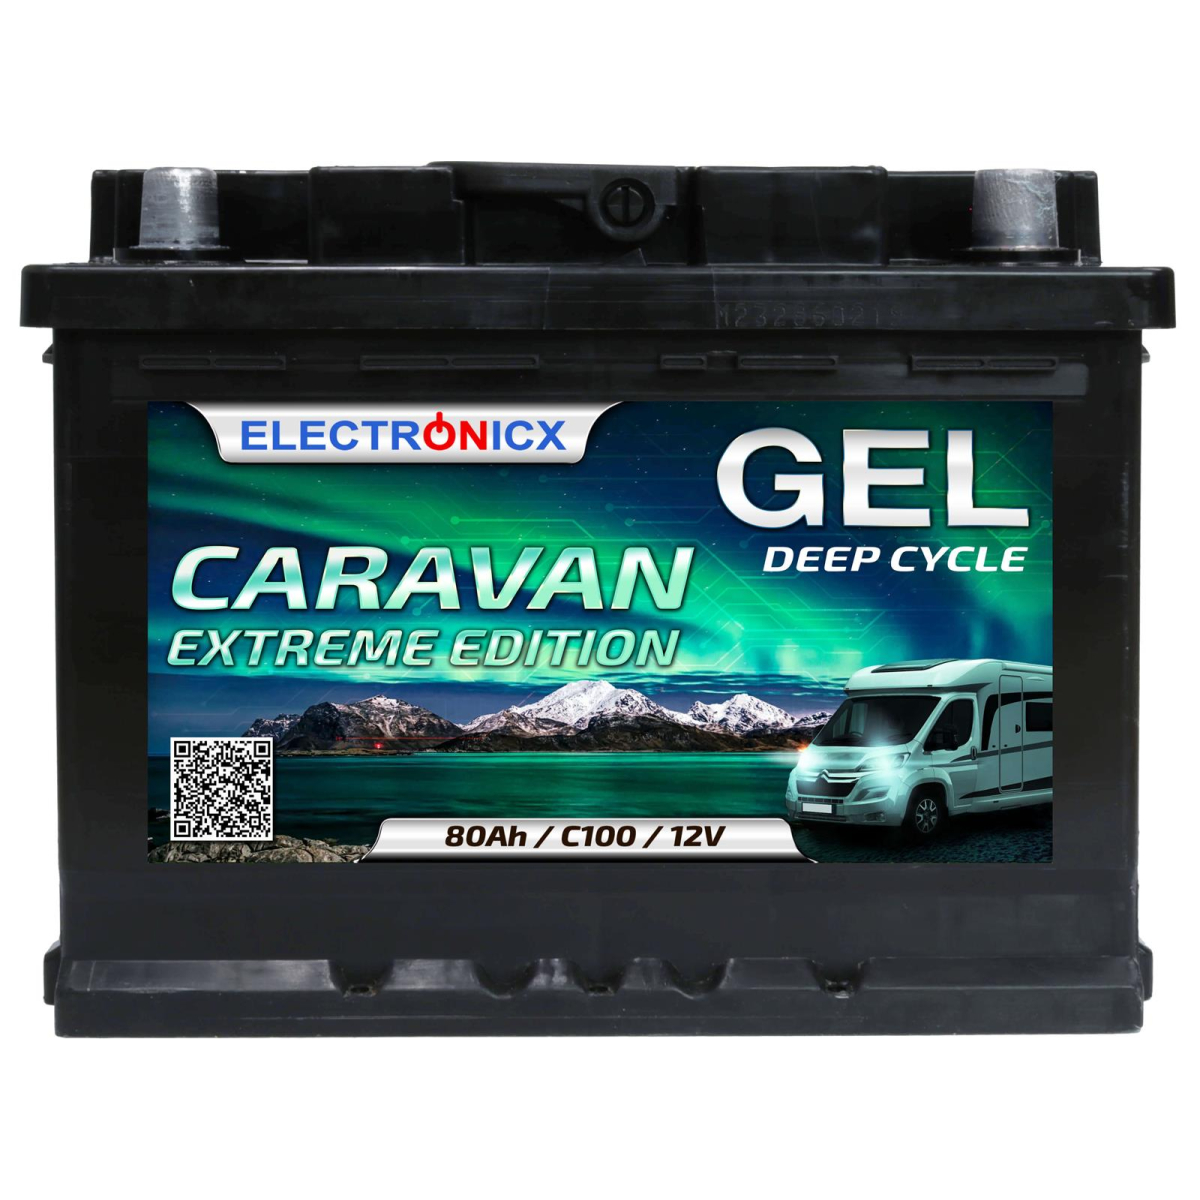 Electronicx Caravan EXTREME Edition Gel Batterie 80 AH 12V Wohnmobil Boot Versorgung